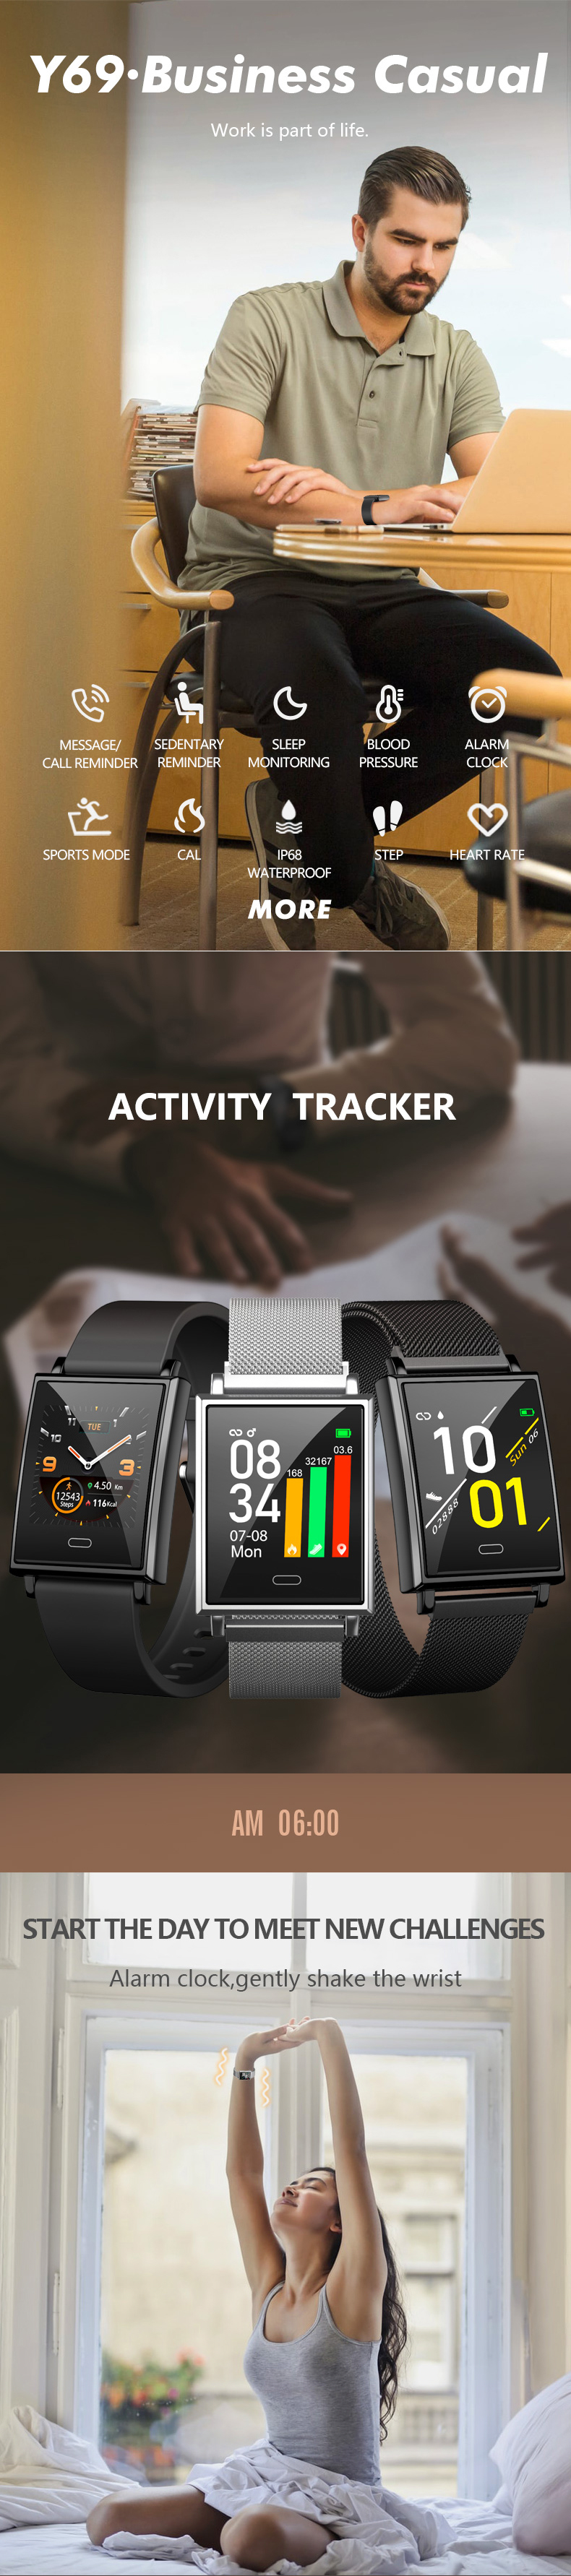 XANES® Y69 1.3in Touch Screen IP68 Waterproof Smart Watch HR BP Monitor Find Phone Countdown Sports Fitness Bracelet